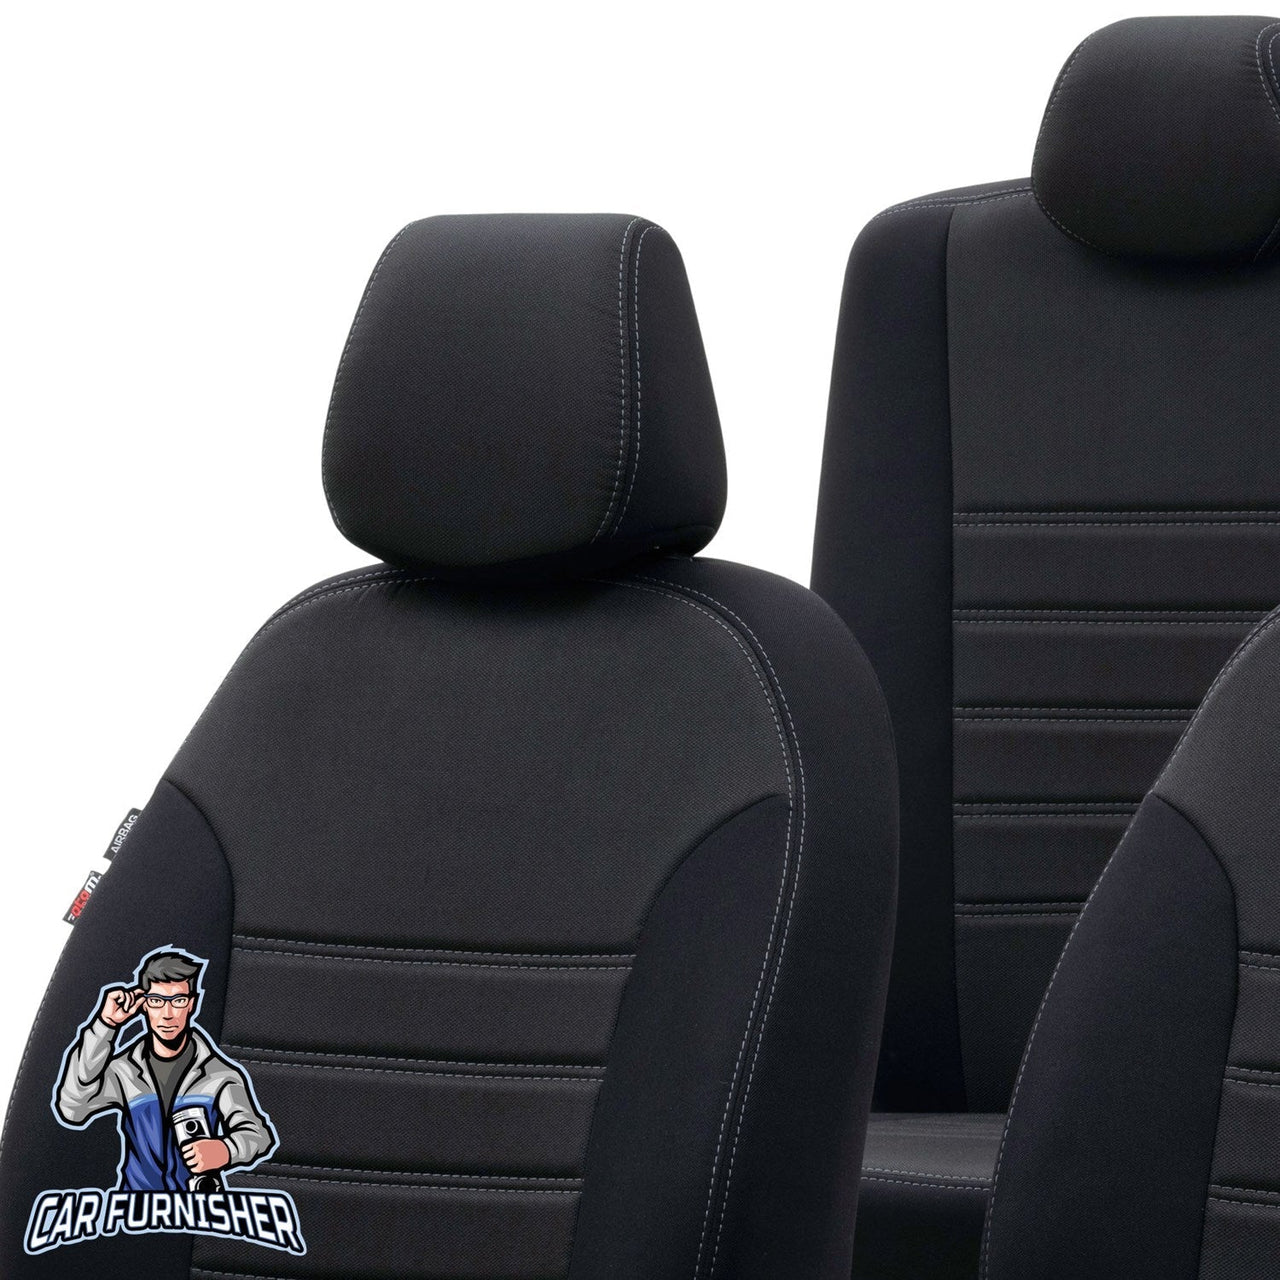 Subaru Legacy Seat Cover Original Jacquard Design Black Jacquard Fabric